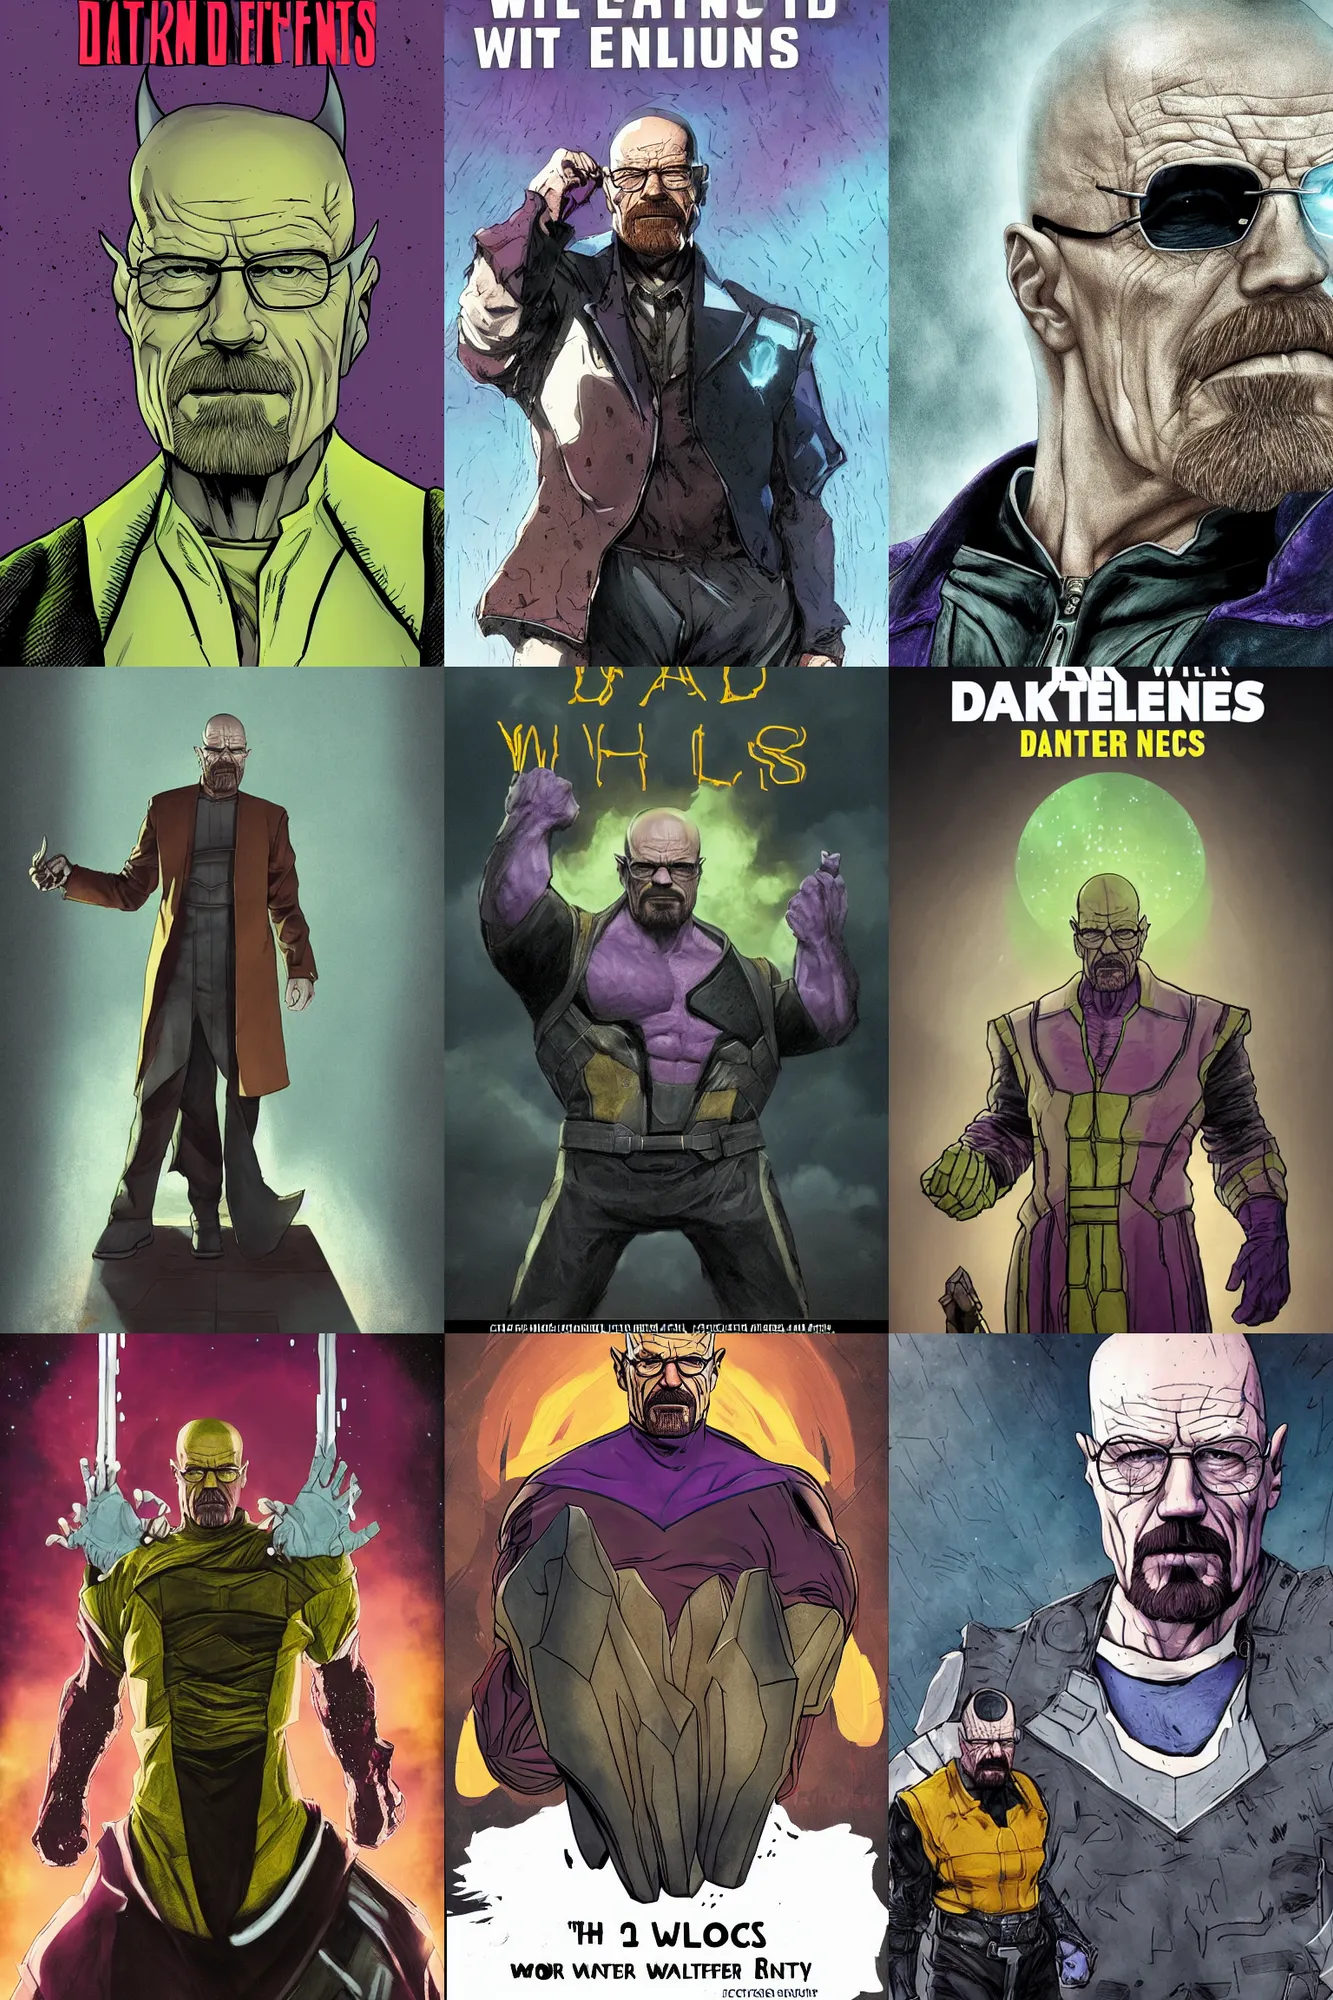 Prompt: concept Walter White as Thanos, book cover, dark fantasy